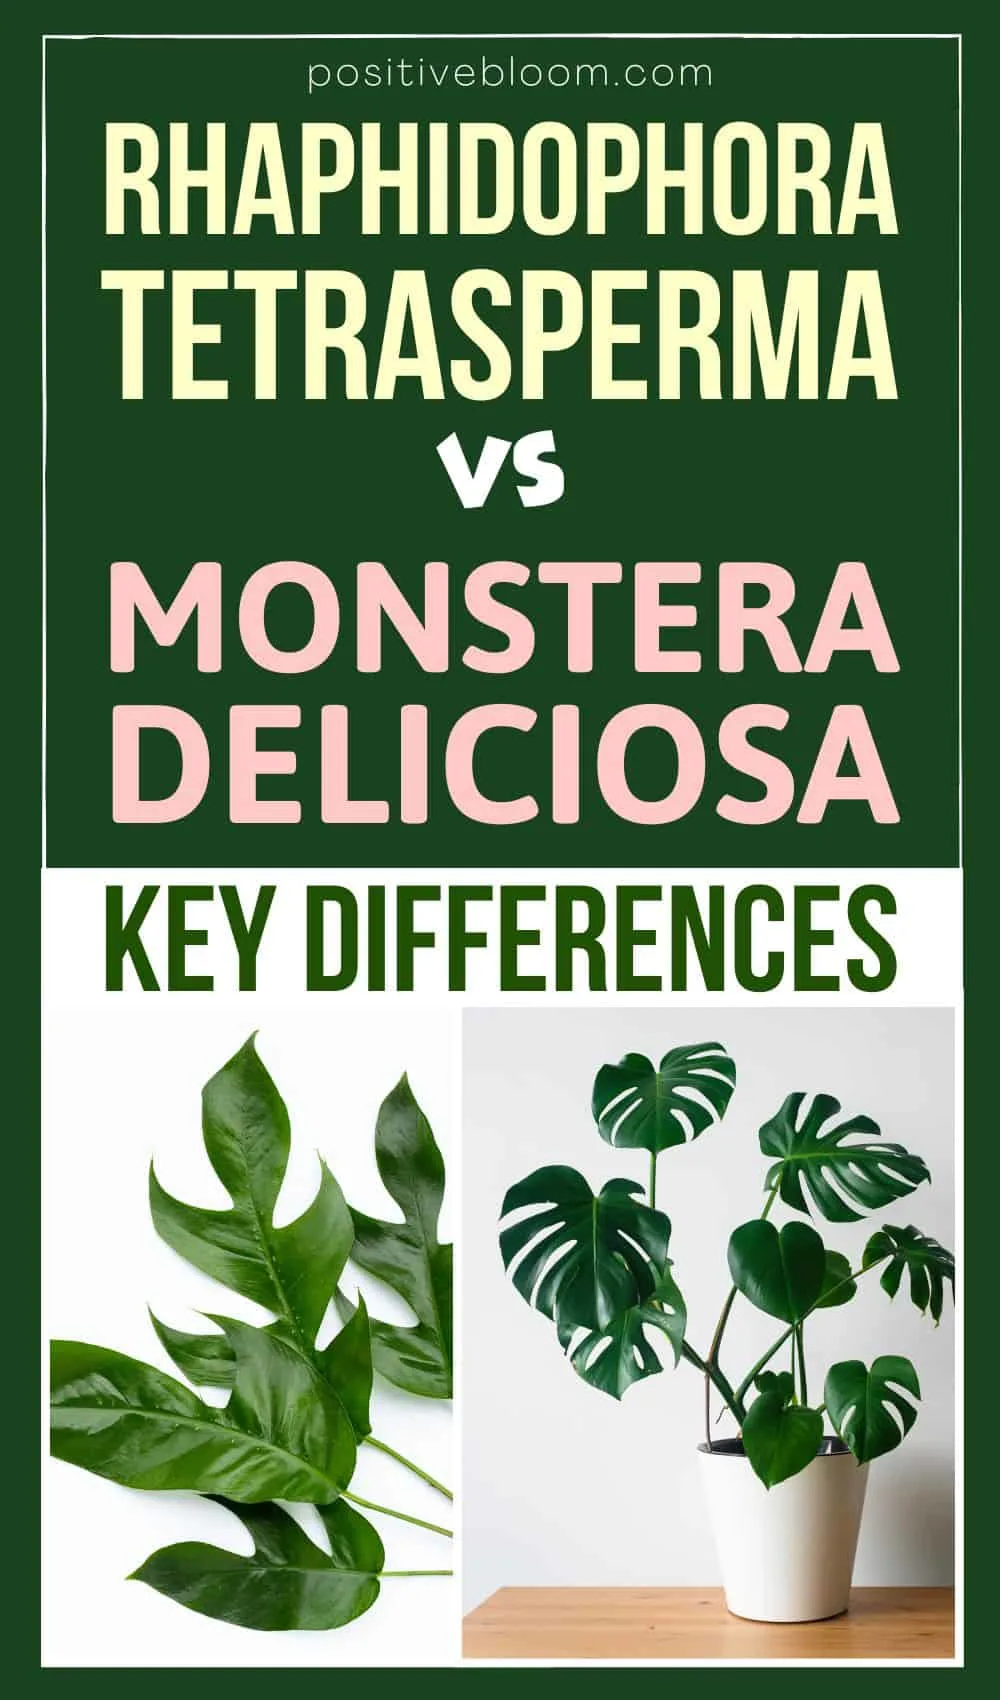 Rhaphidophora Tetrasperma vs Monstera Deliciosa - Key Differences